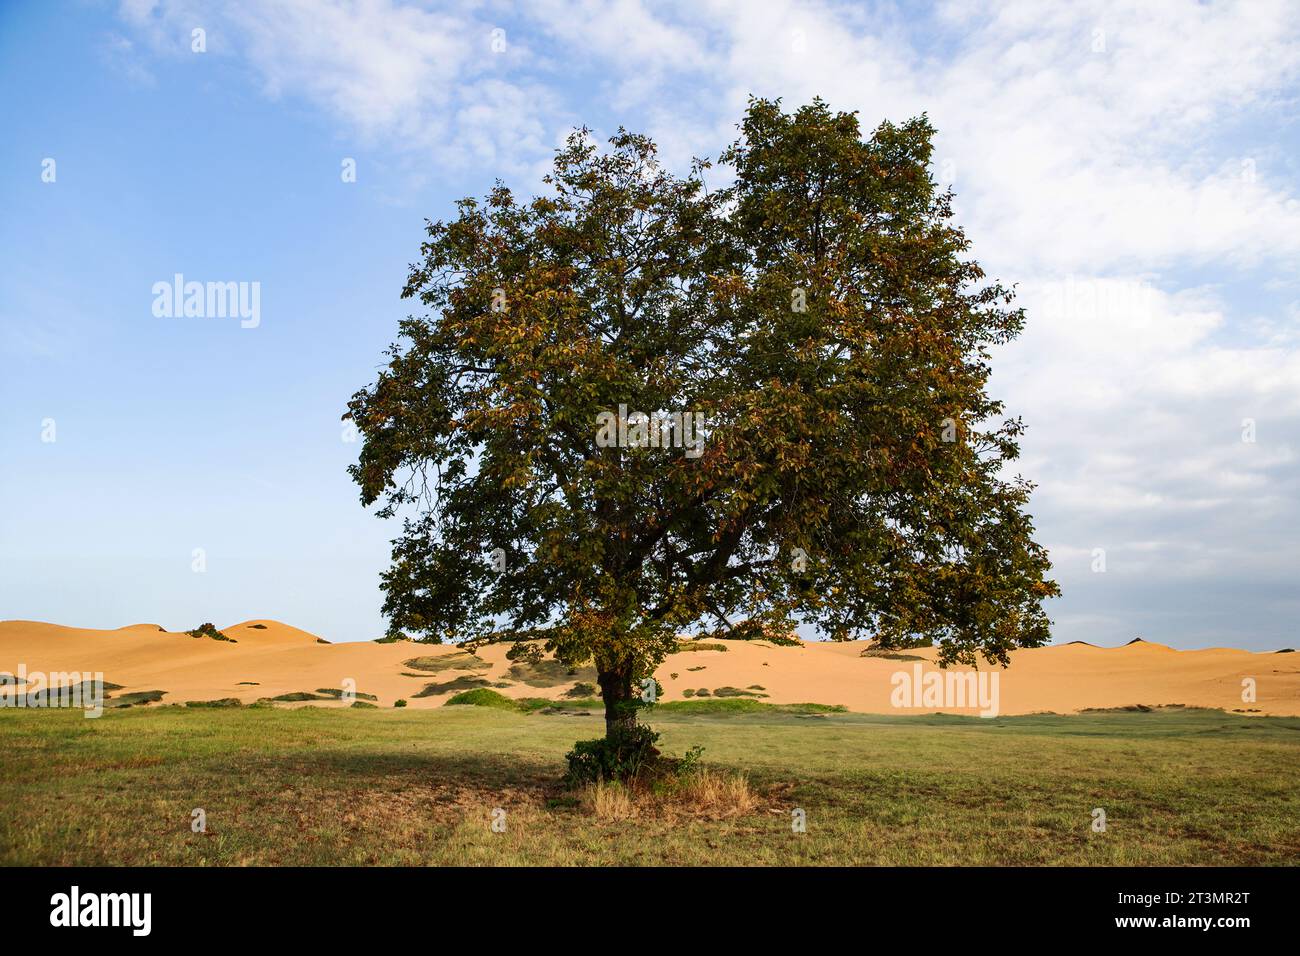 tree in desert oasis Stock Photo